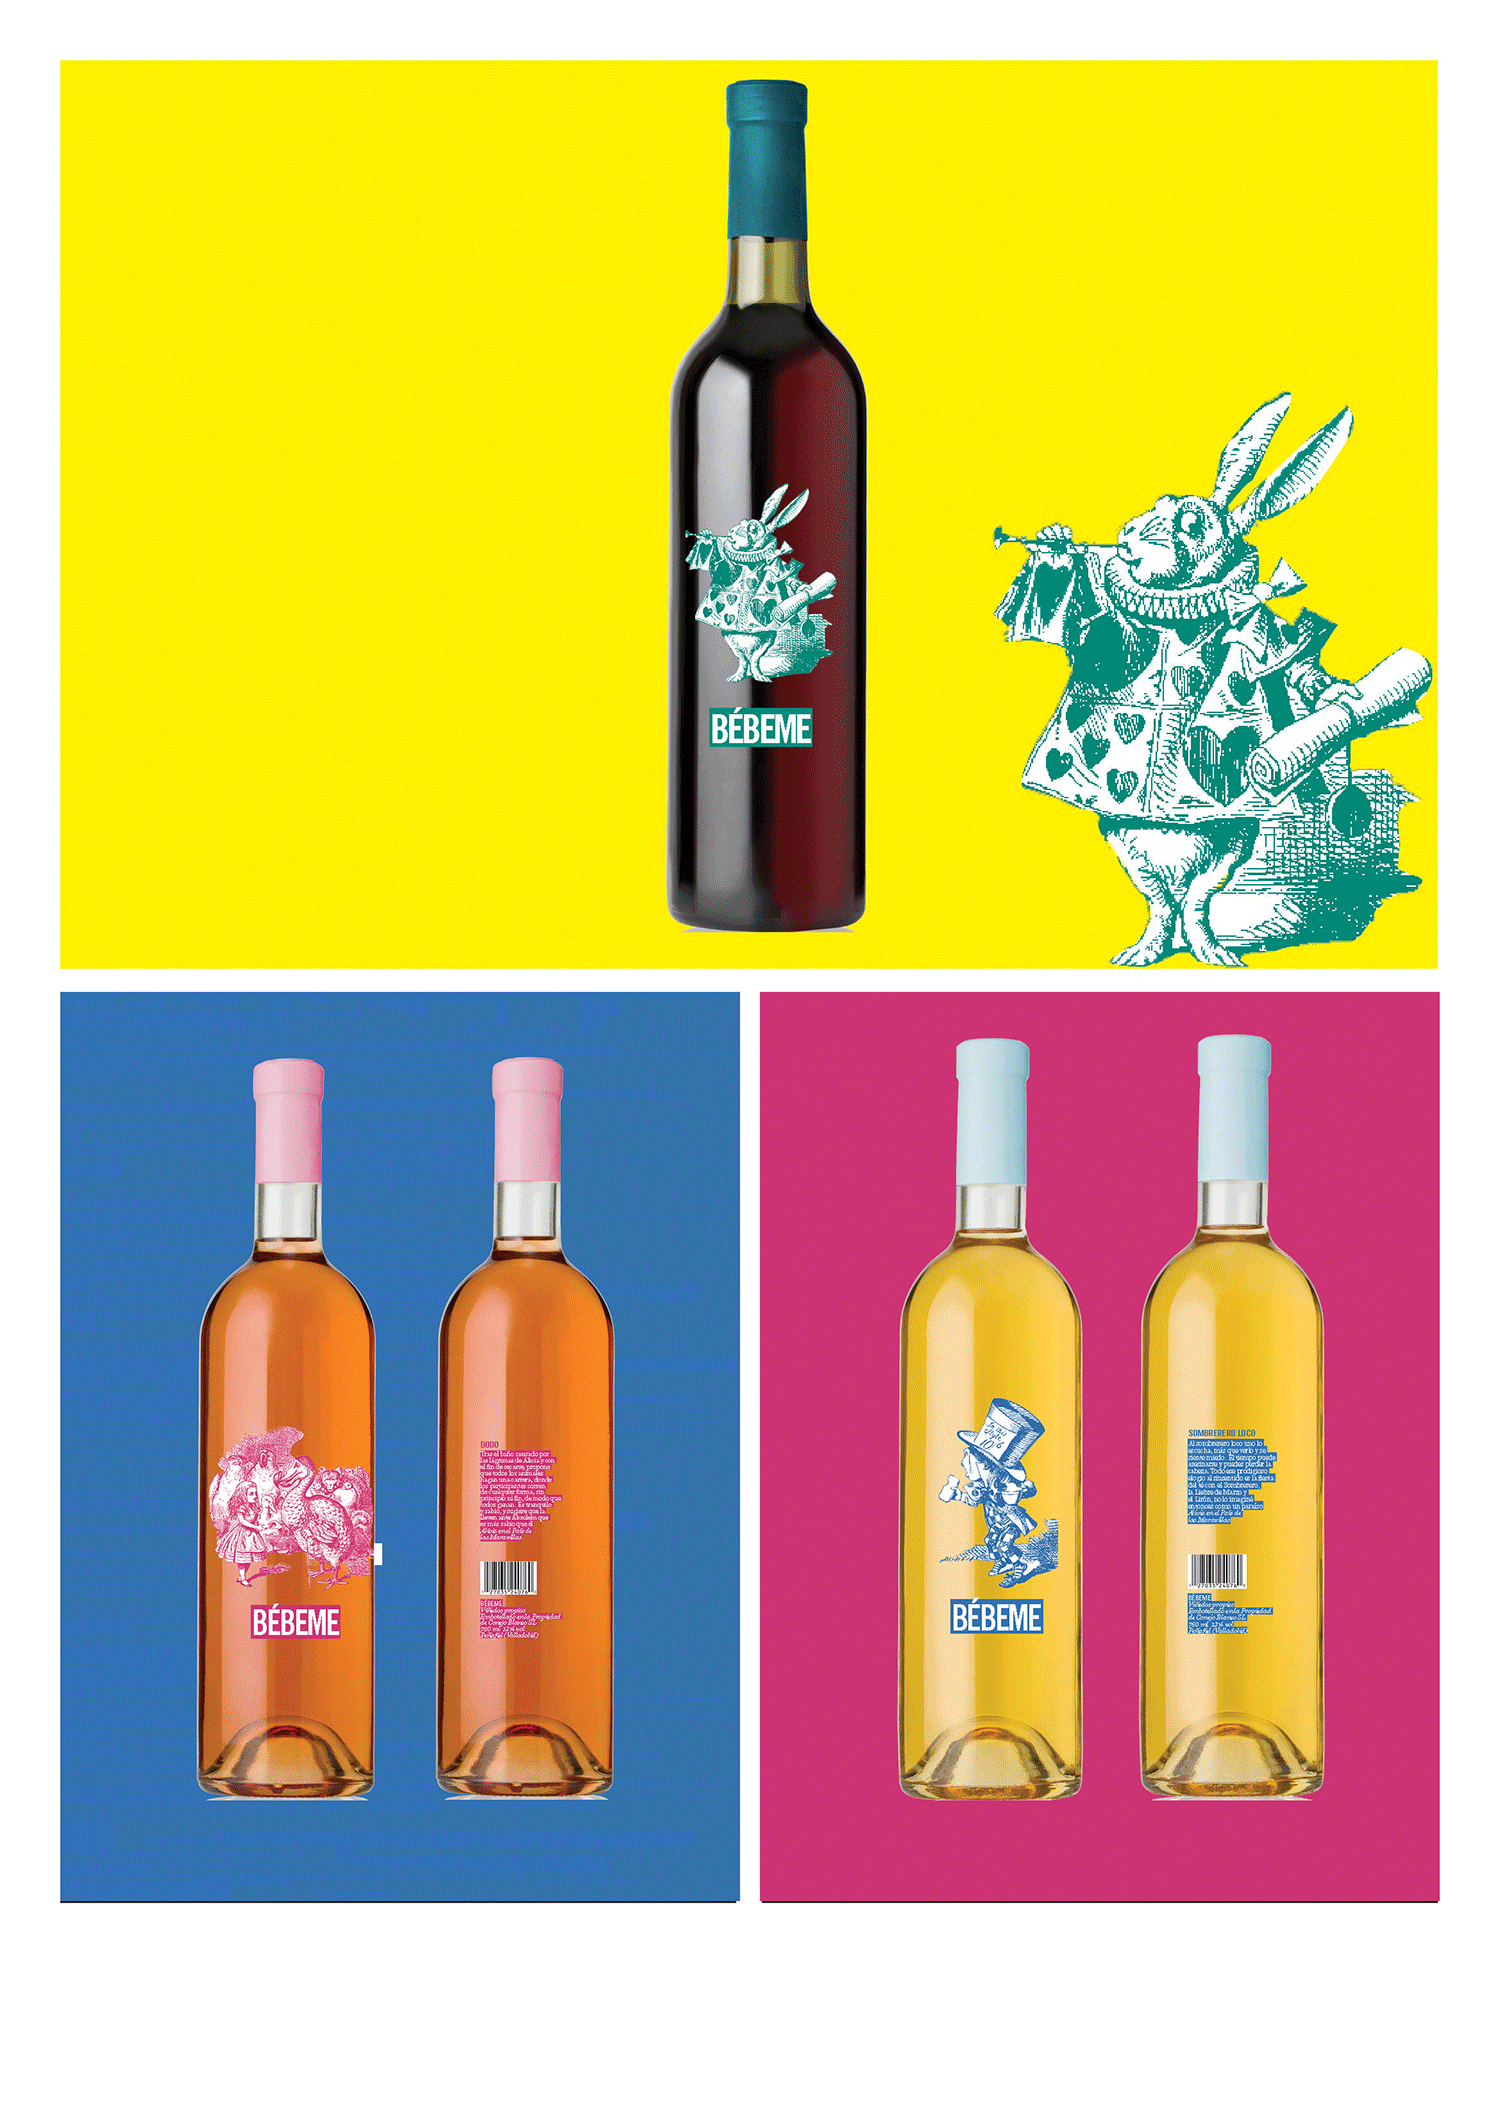 BÉBEME. Colección de vinos by Alberto Molina Arce - Creative Work